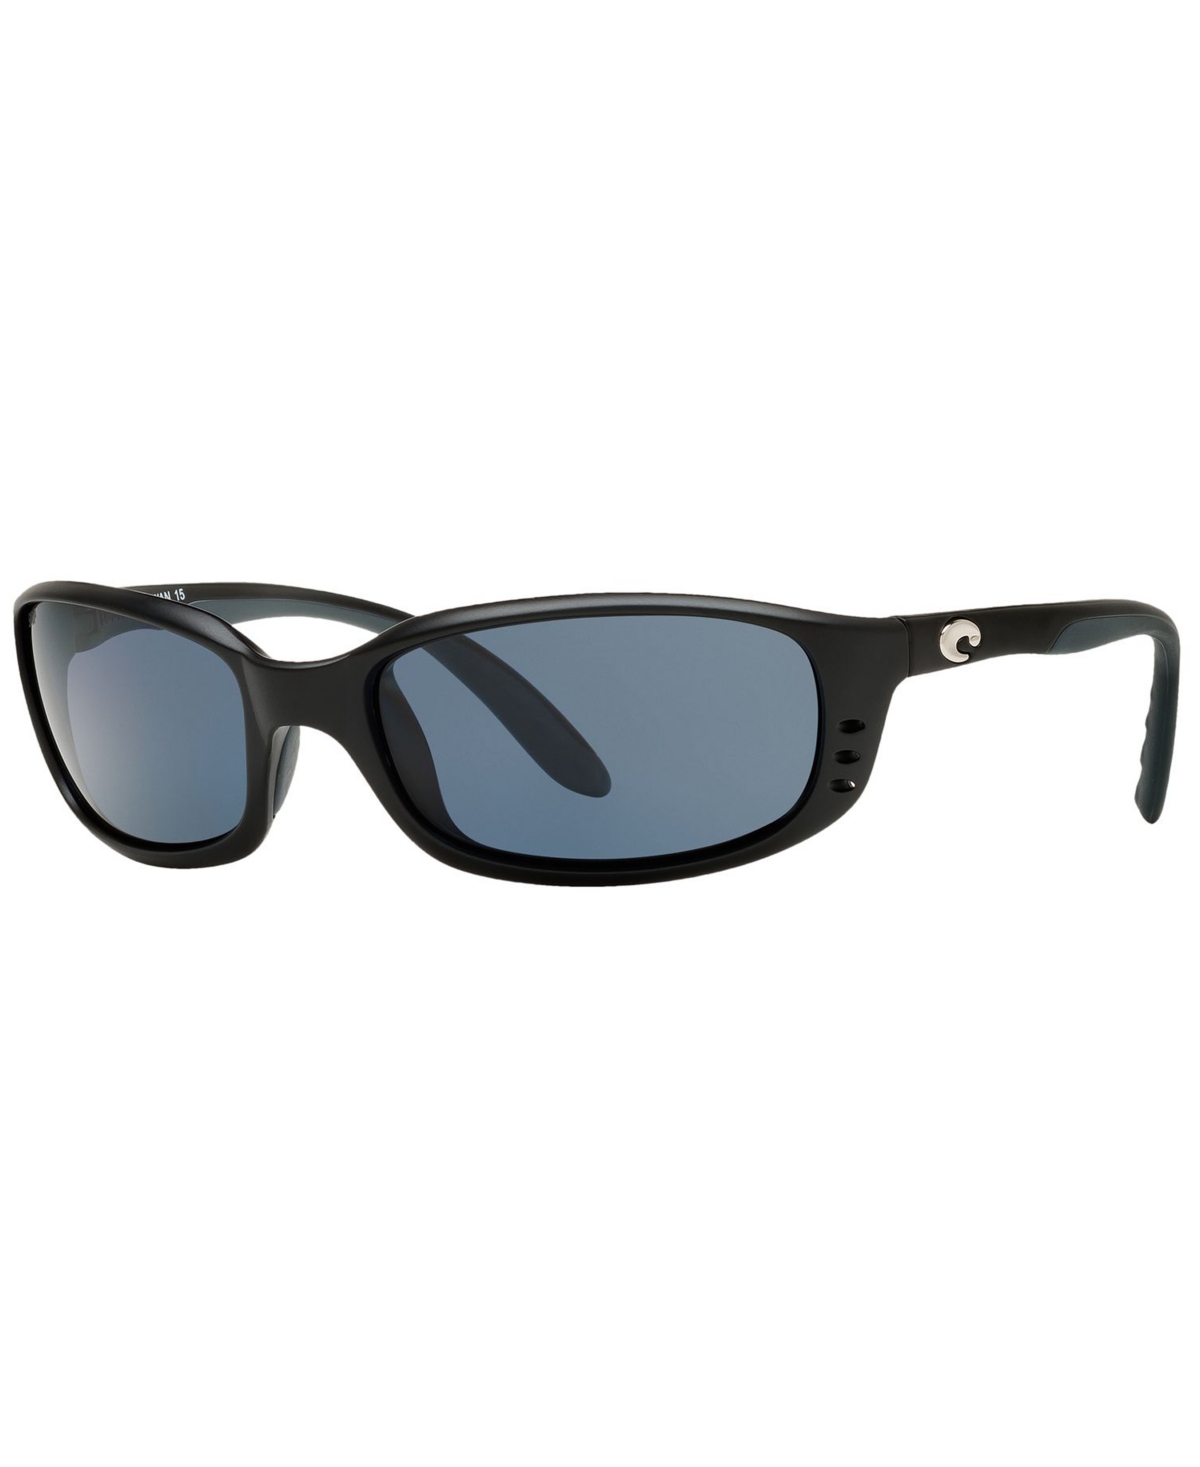 Polarized Sunglasses, Brinep - Matte Black/ P Grey